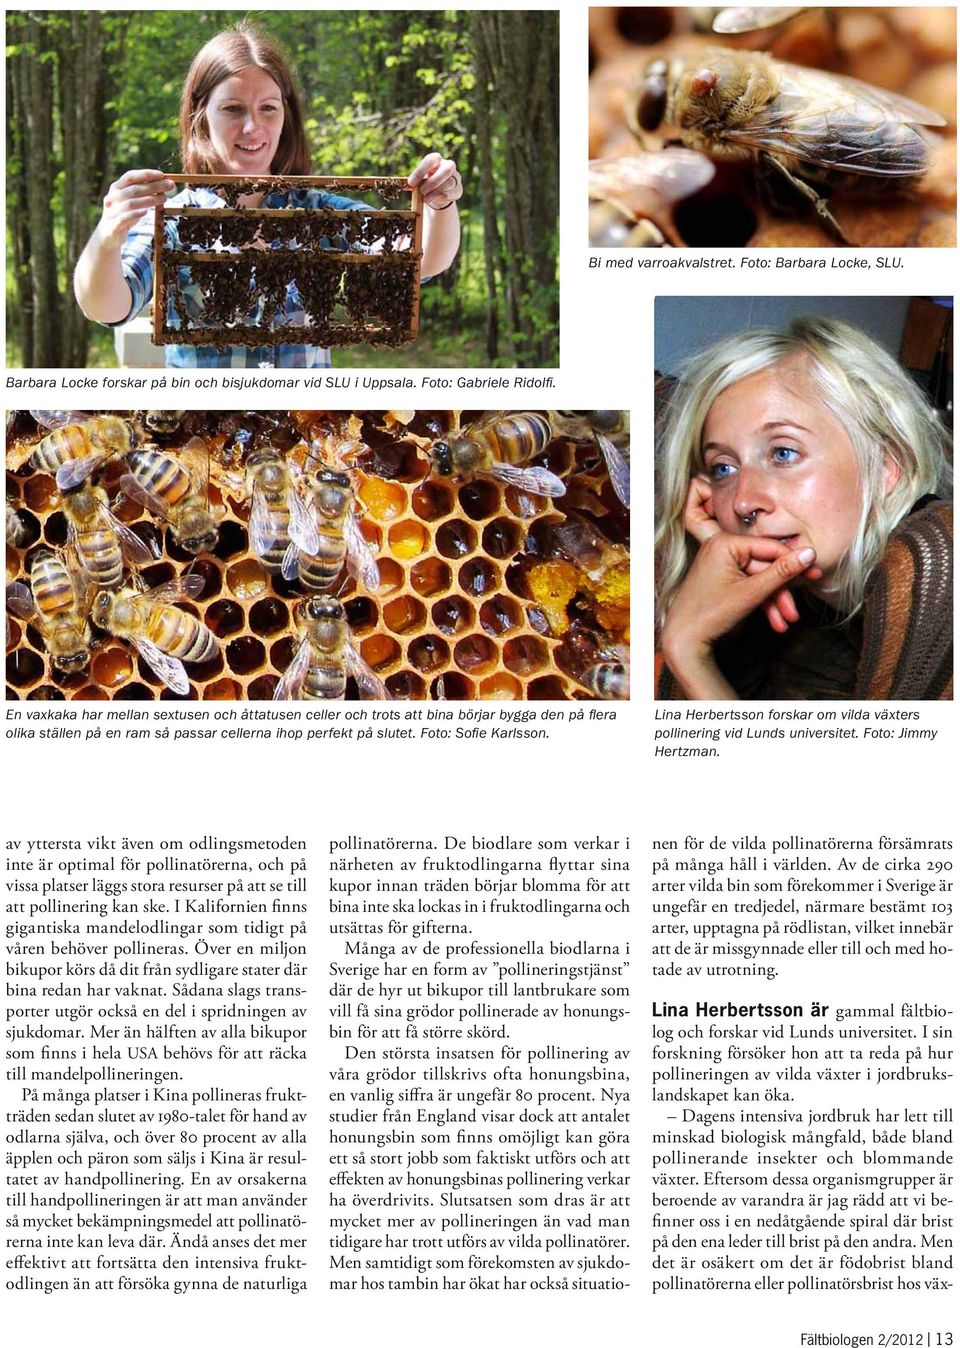 Lina Herbertsson forskar om vilda växters pollinering vid Lunds universitet. Foto: Jimmy Hertzman.